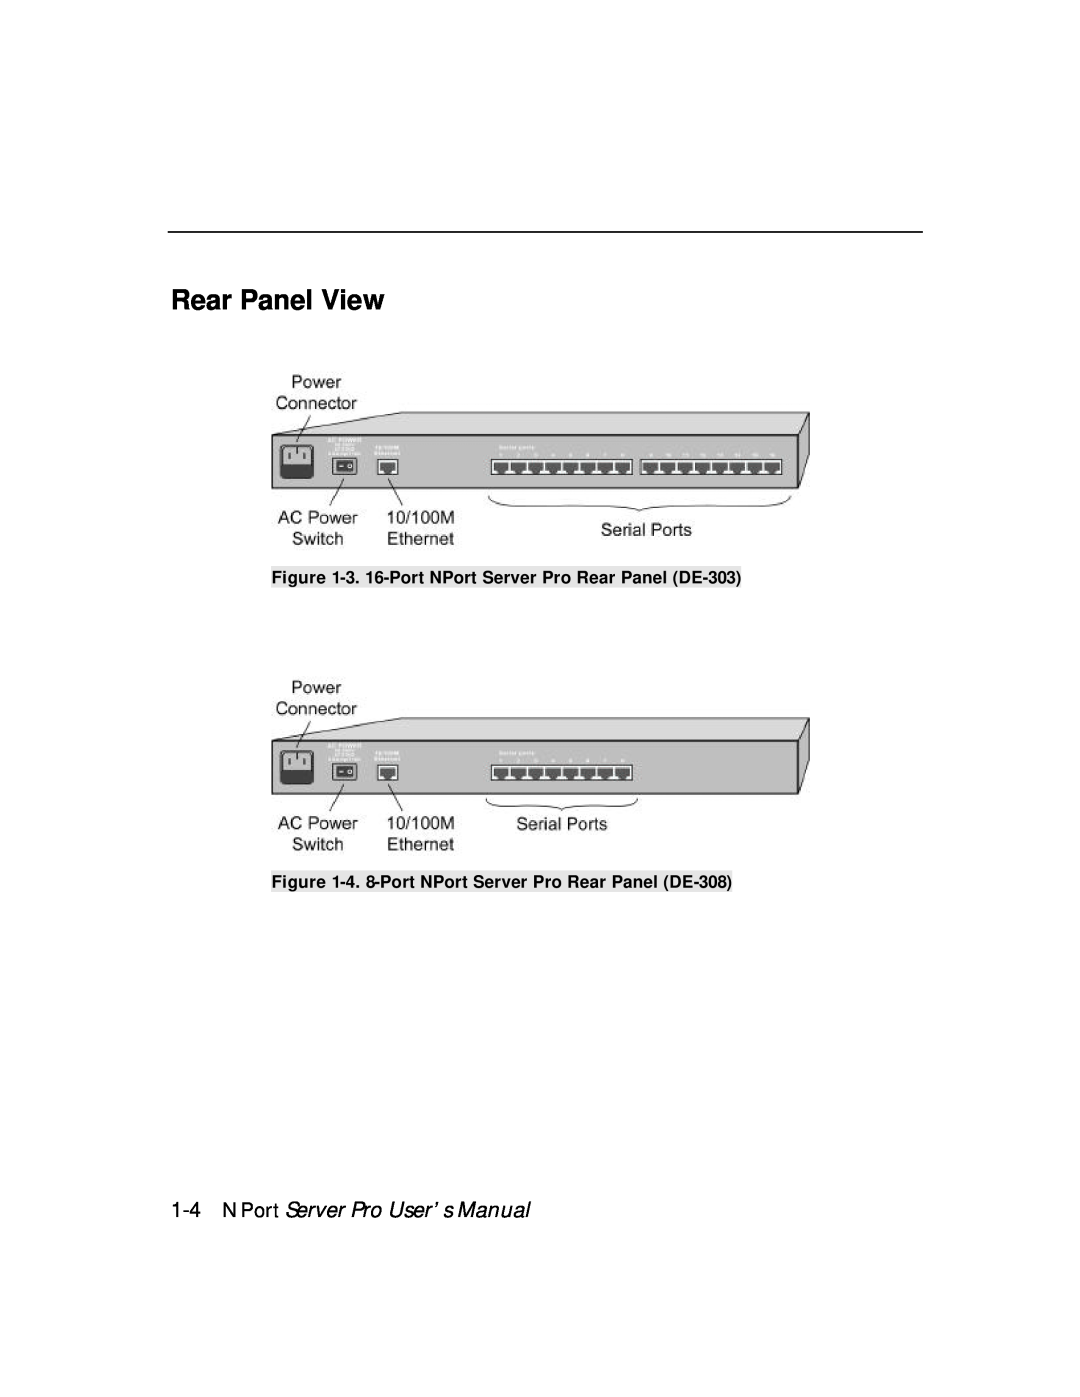 Moxa Technologies manual Rear Panel View, NPort Server Pro User’s Manual, 3. 16-Port NPort Server Pro Rear Panel DE-303 